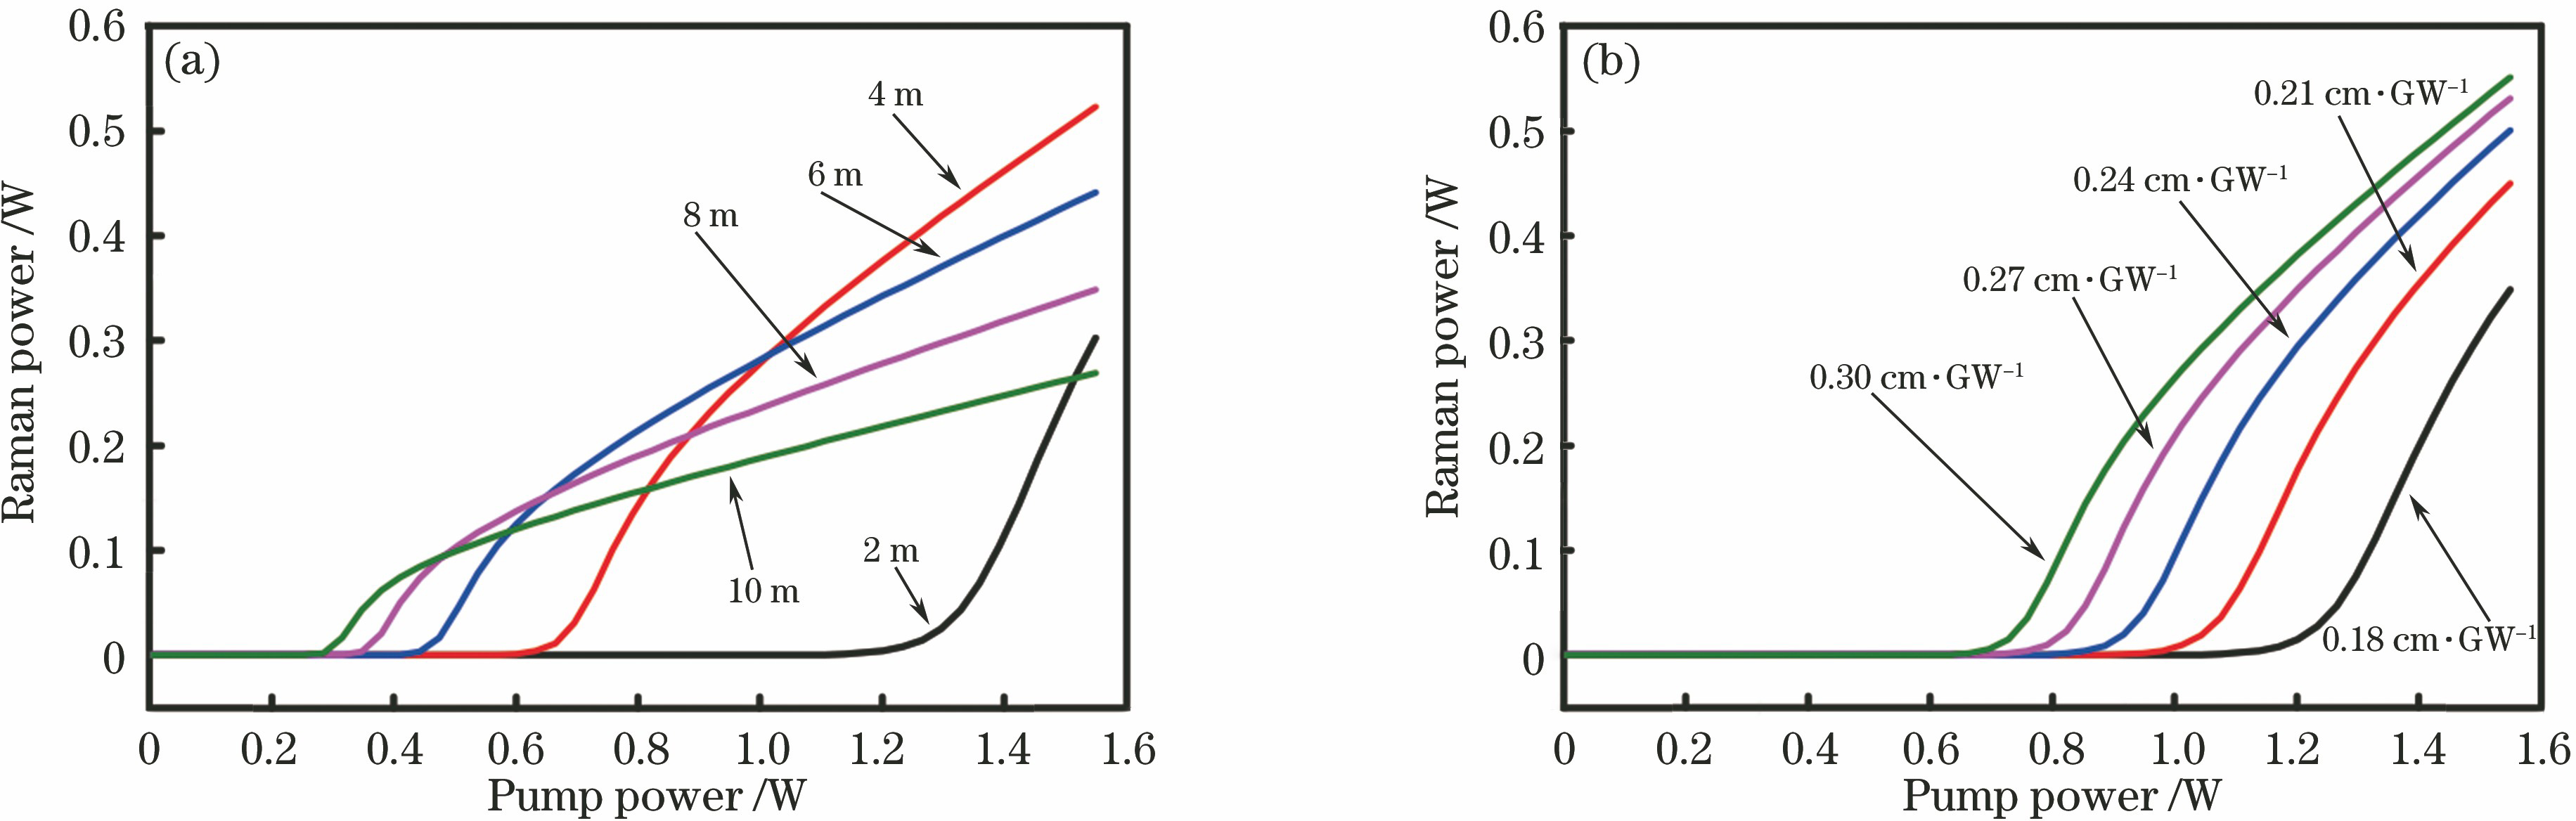 Simulation results. (a) Power curves under different fiber lengths (Raman gain is 0.26 cm·GW-1); (b) power curves under different Raman gains (fiber length is 3.2 m)